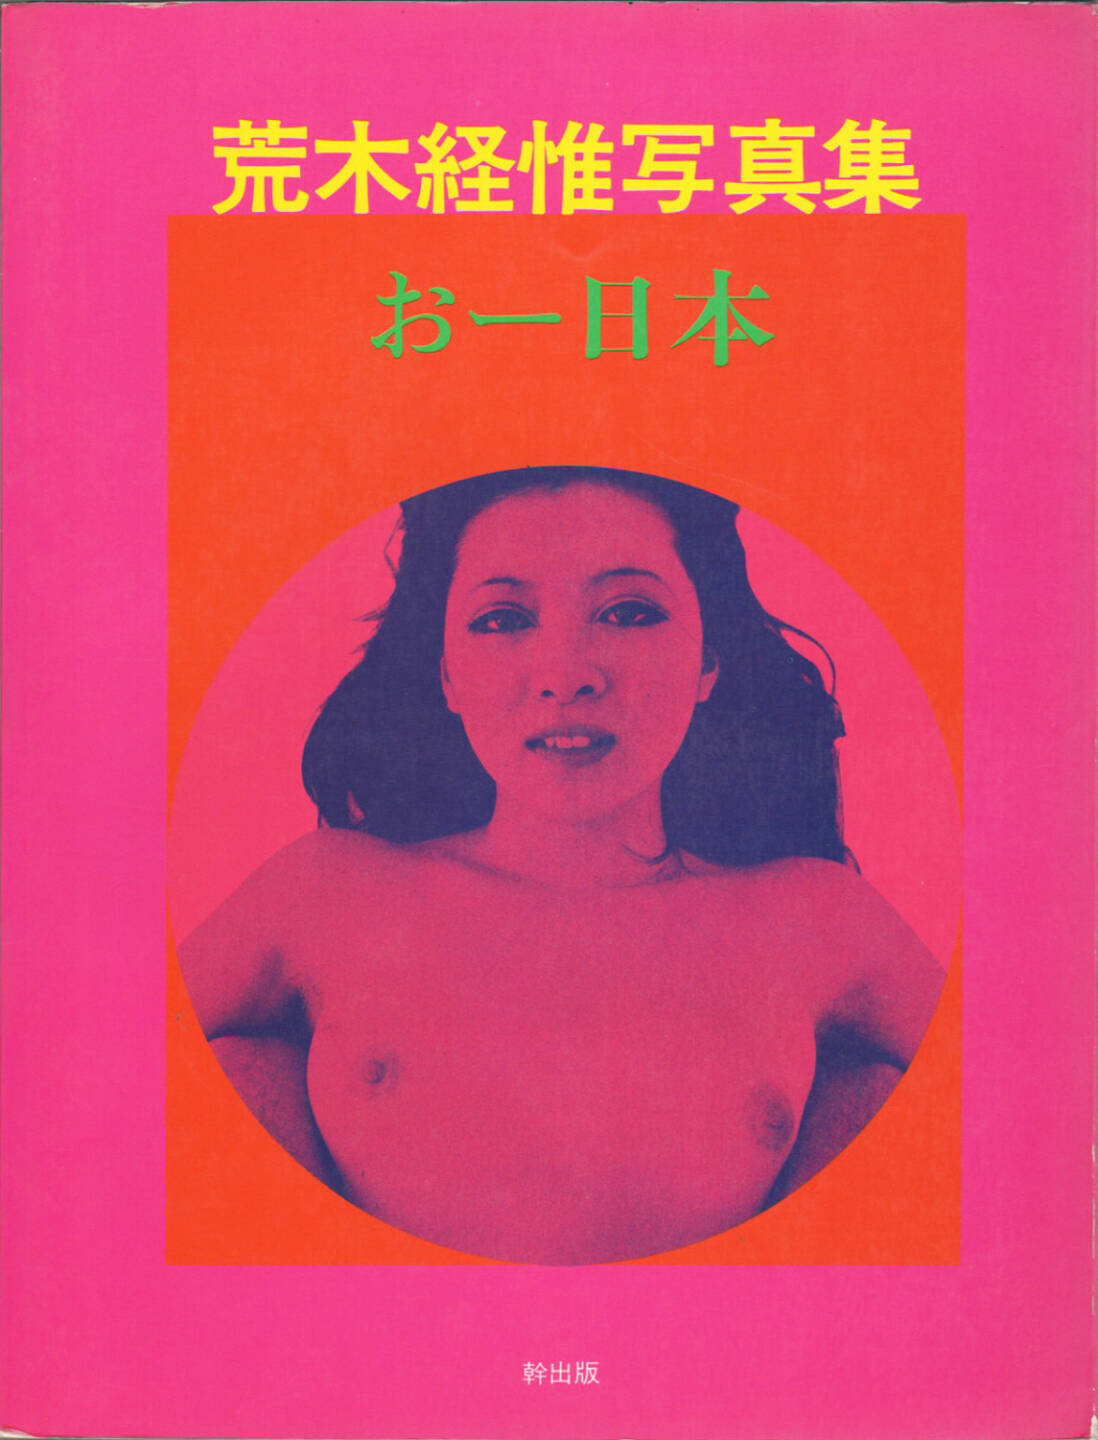 Nobuyoshi Araki - Oh Nippon (荒木経惟 おー日本), Miki Shuppan 1971, Cover - http://josefchladek.com/book/nobuyoshi_araki_-_oh_nippon_荒木経惟_おー日本